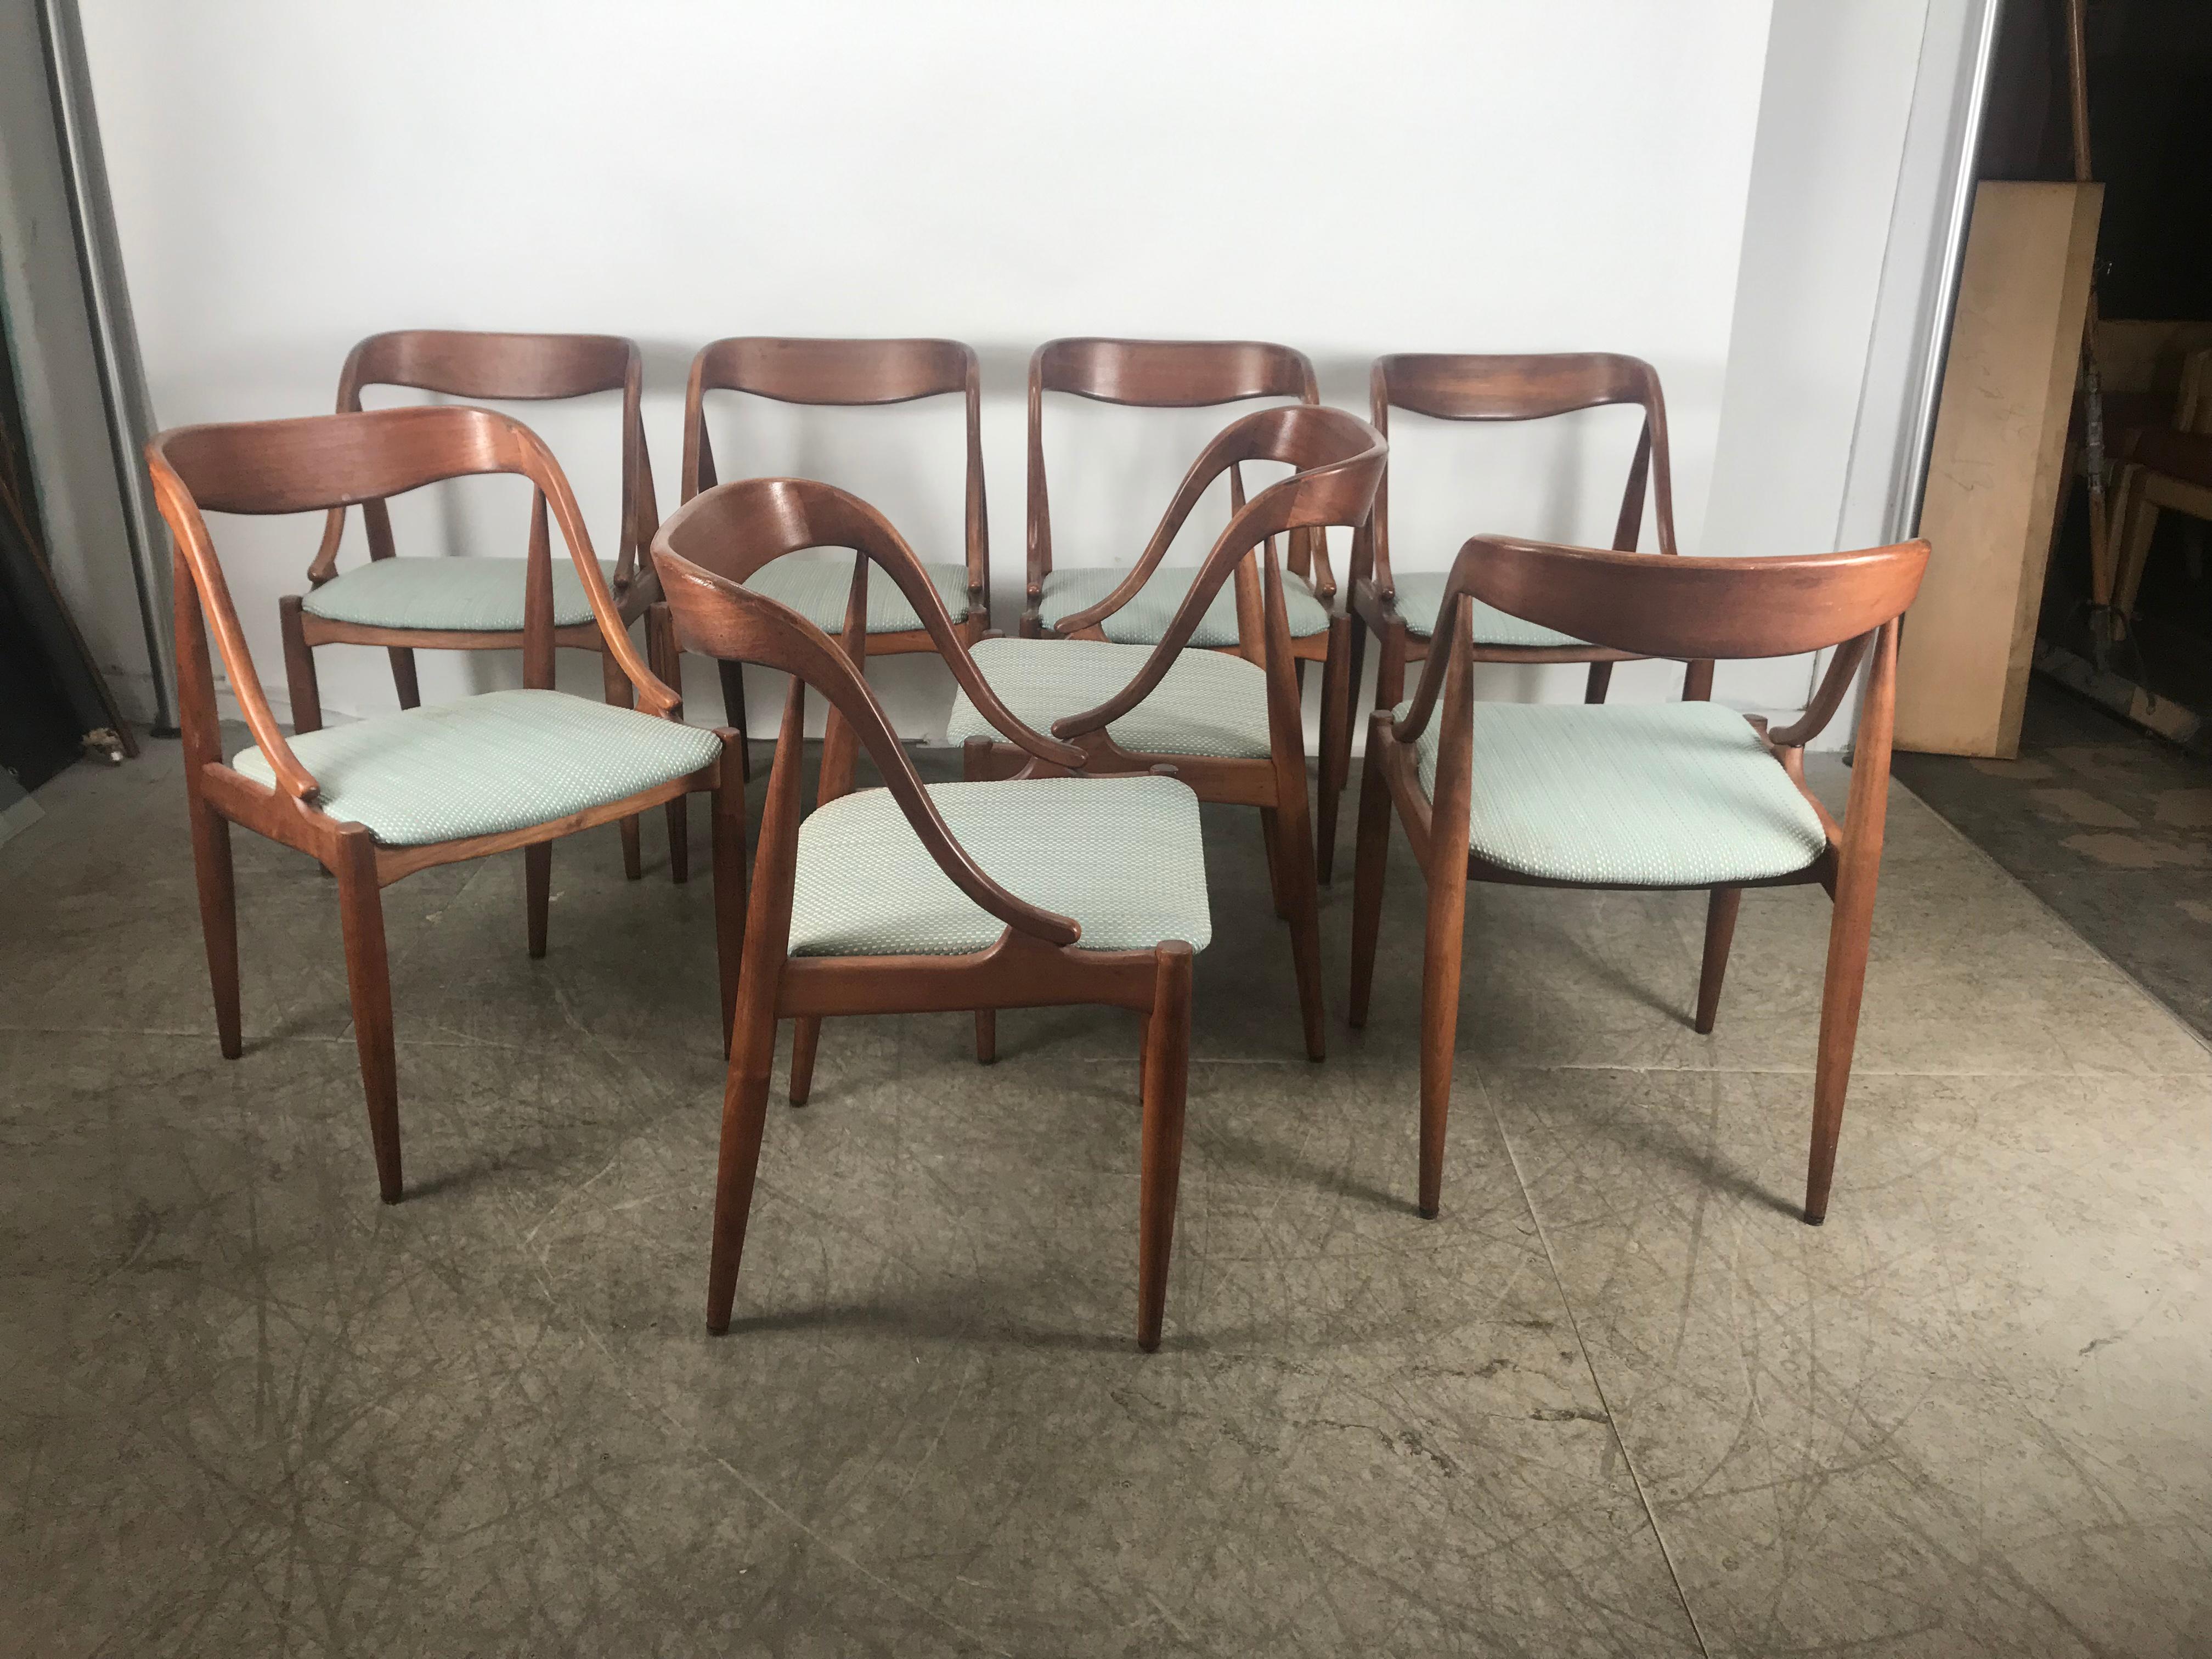 20th Century Set of 8 Teak Dining Chairs by Johannes Andersen for Moreddi, Denmark